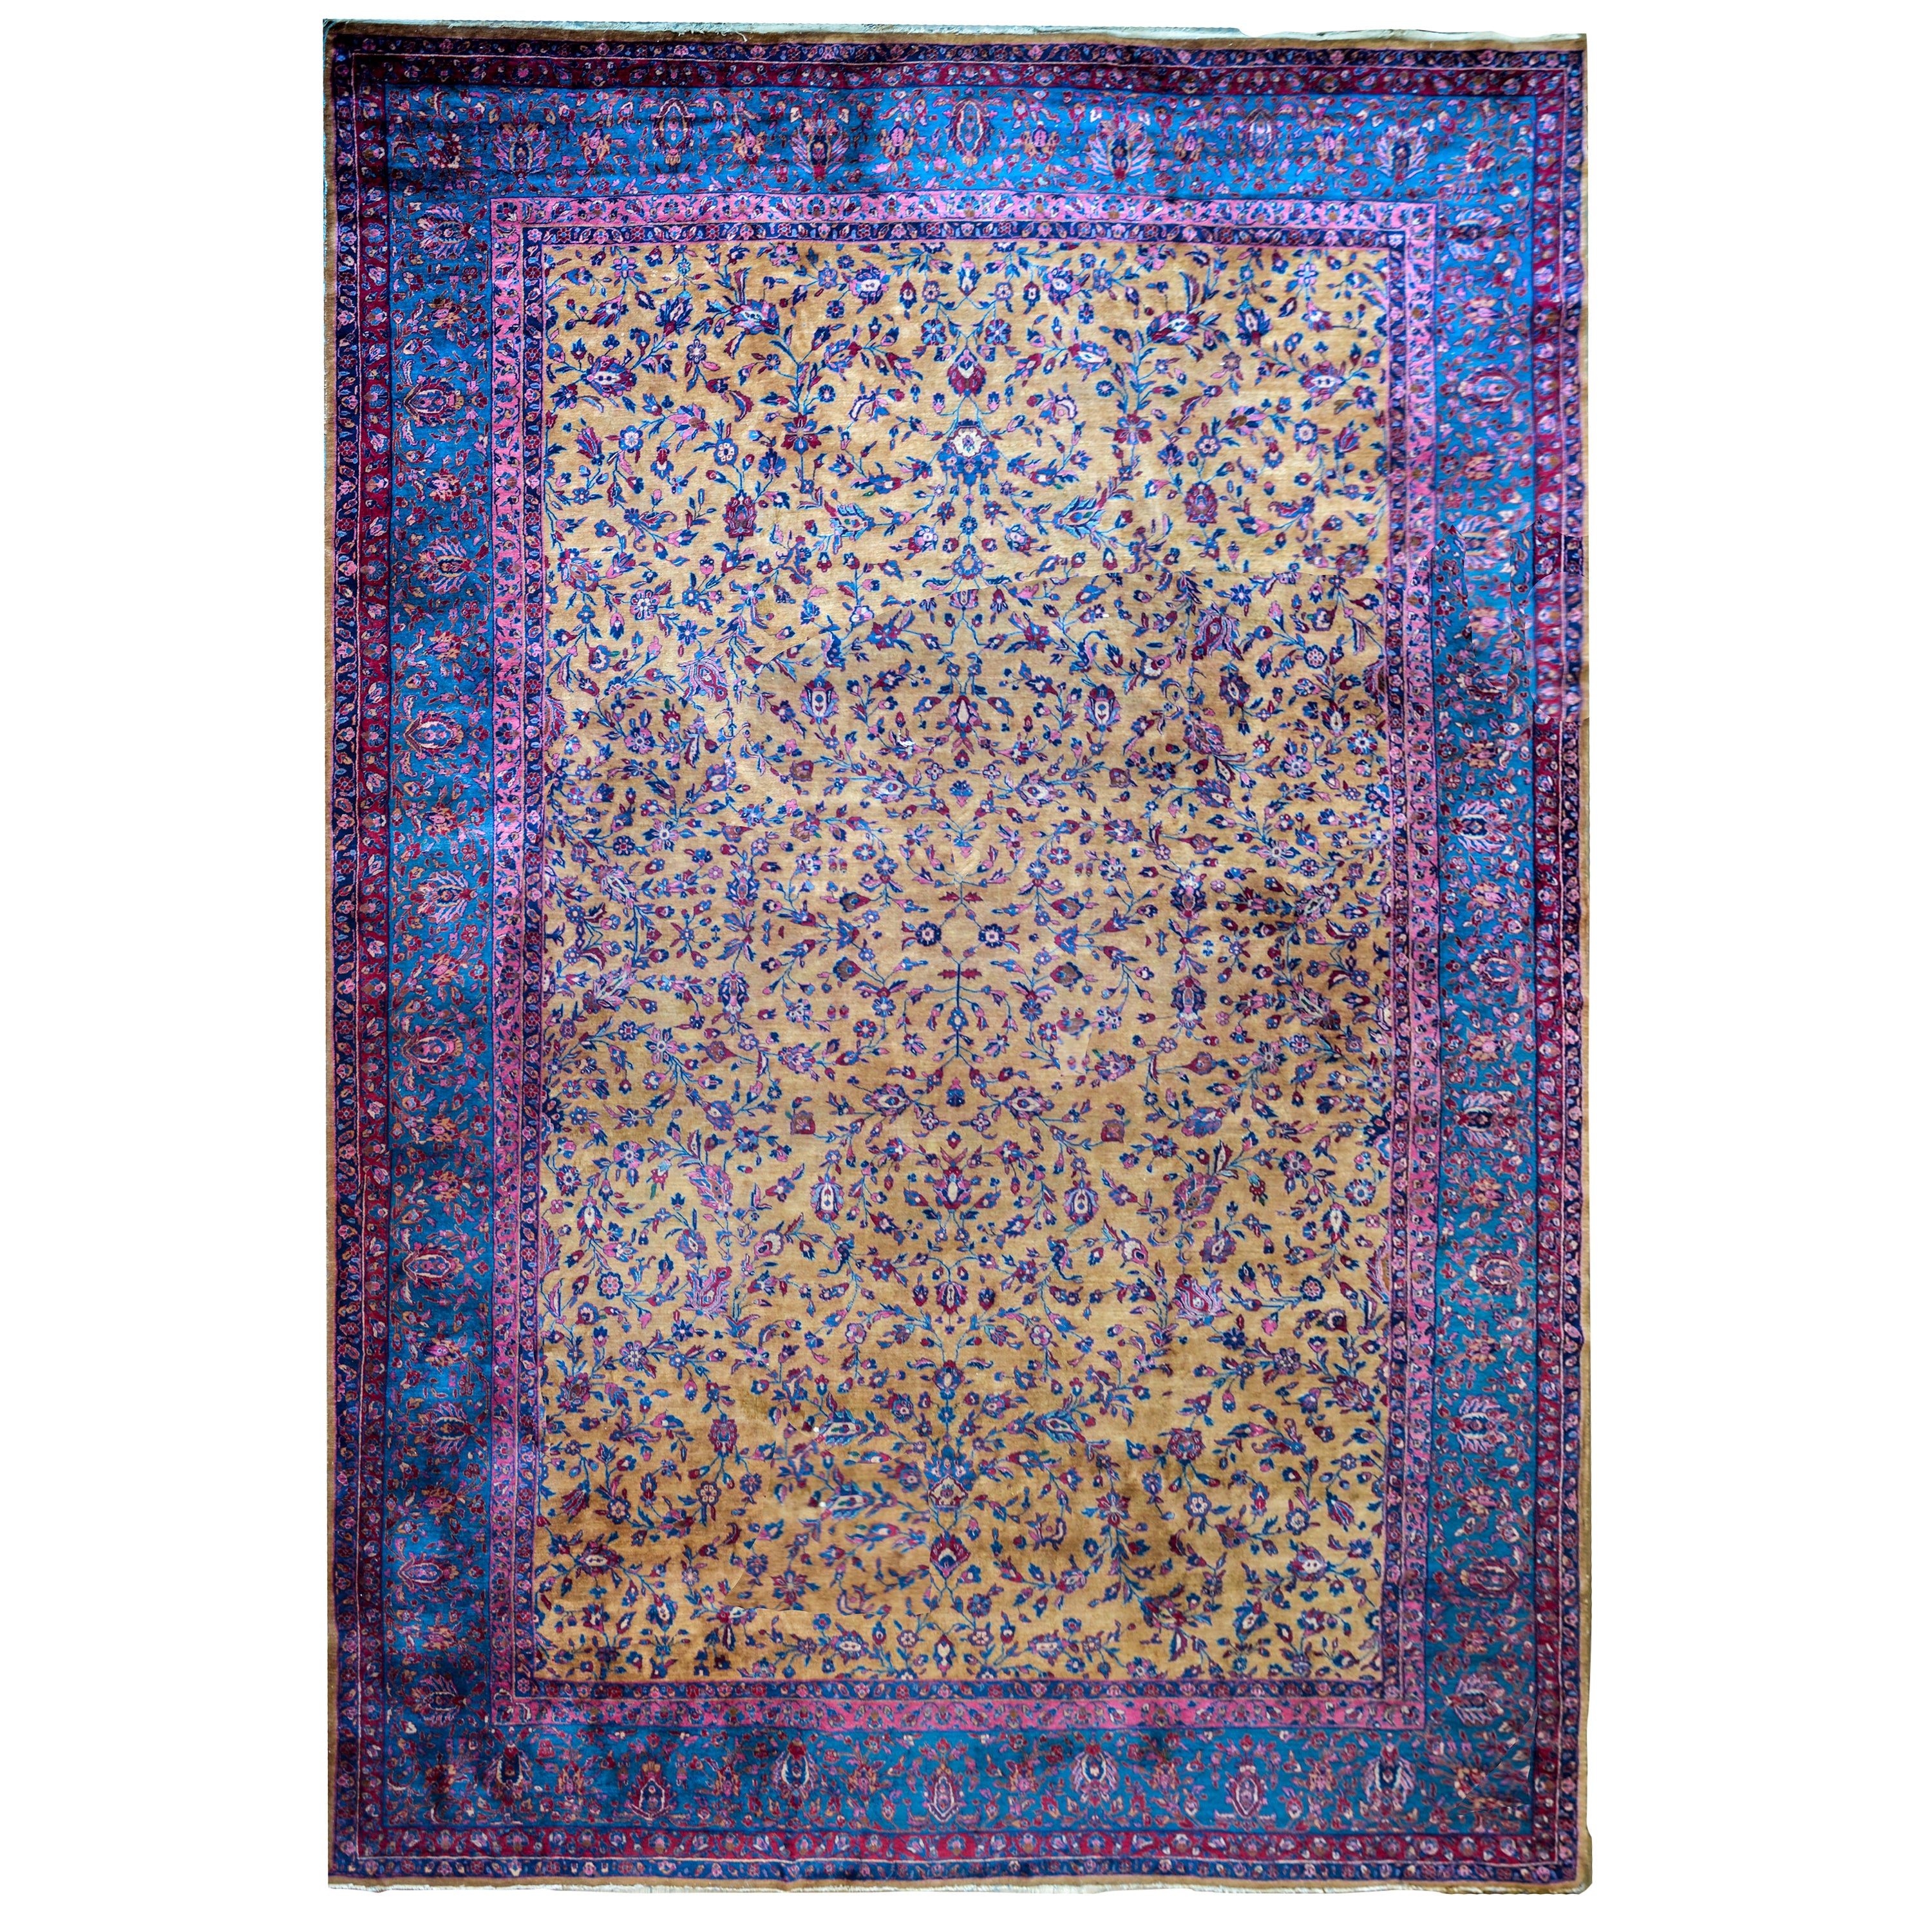 Early 20th Century Persian Kashan Rug